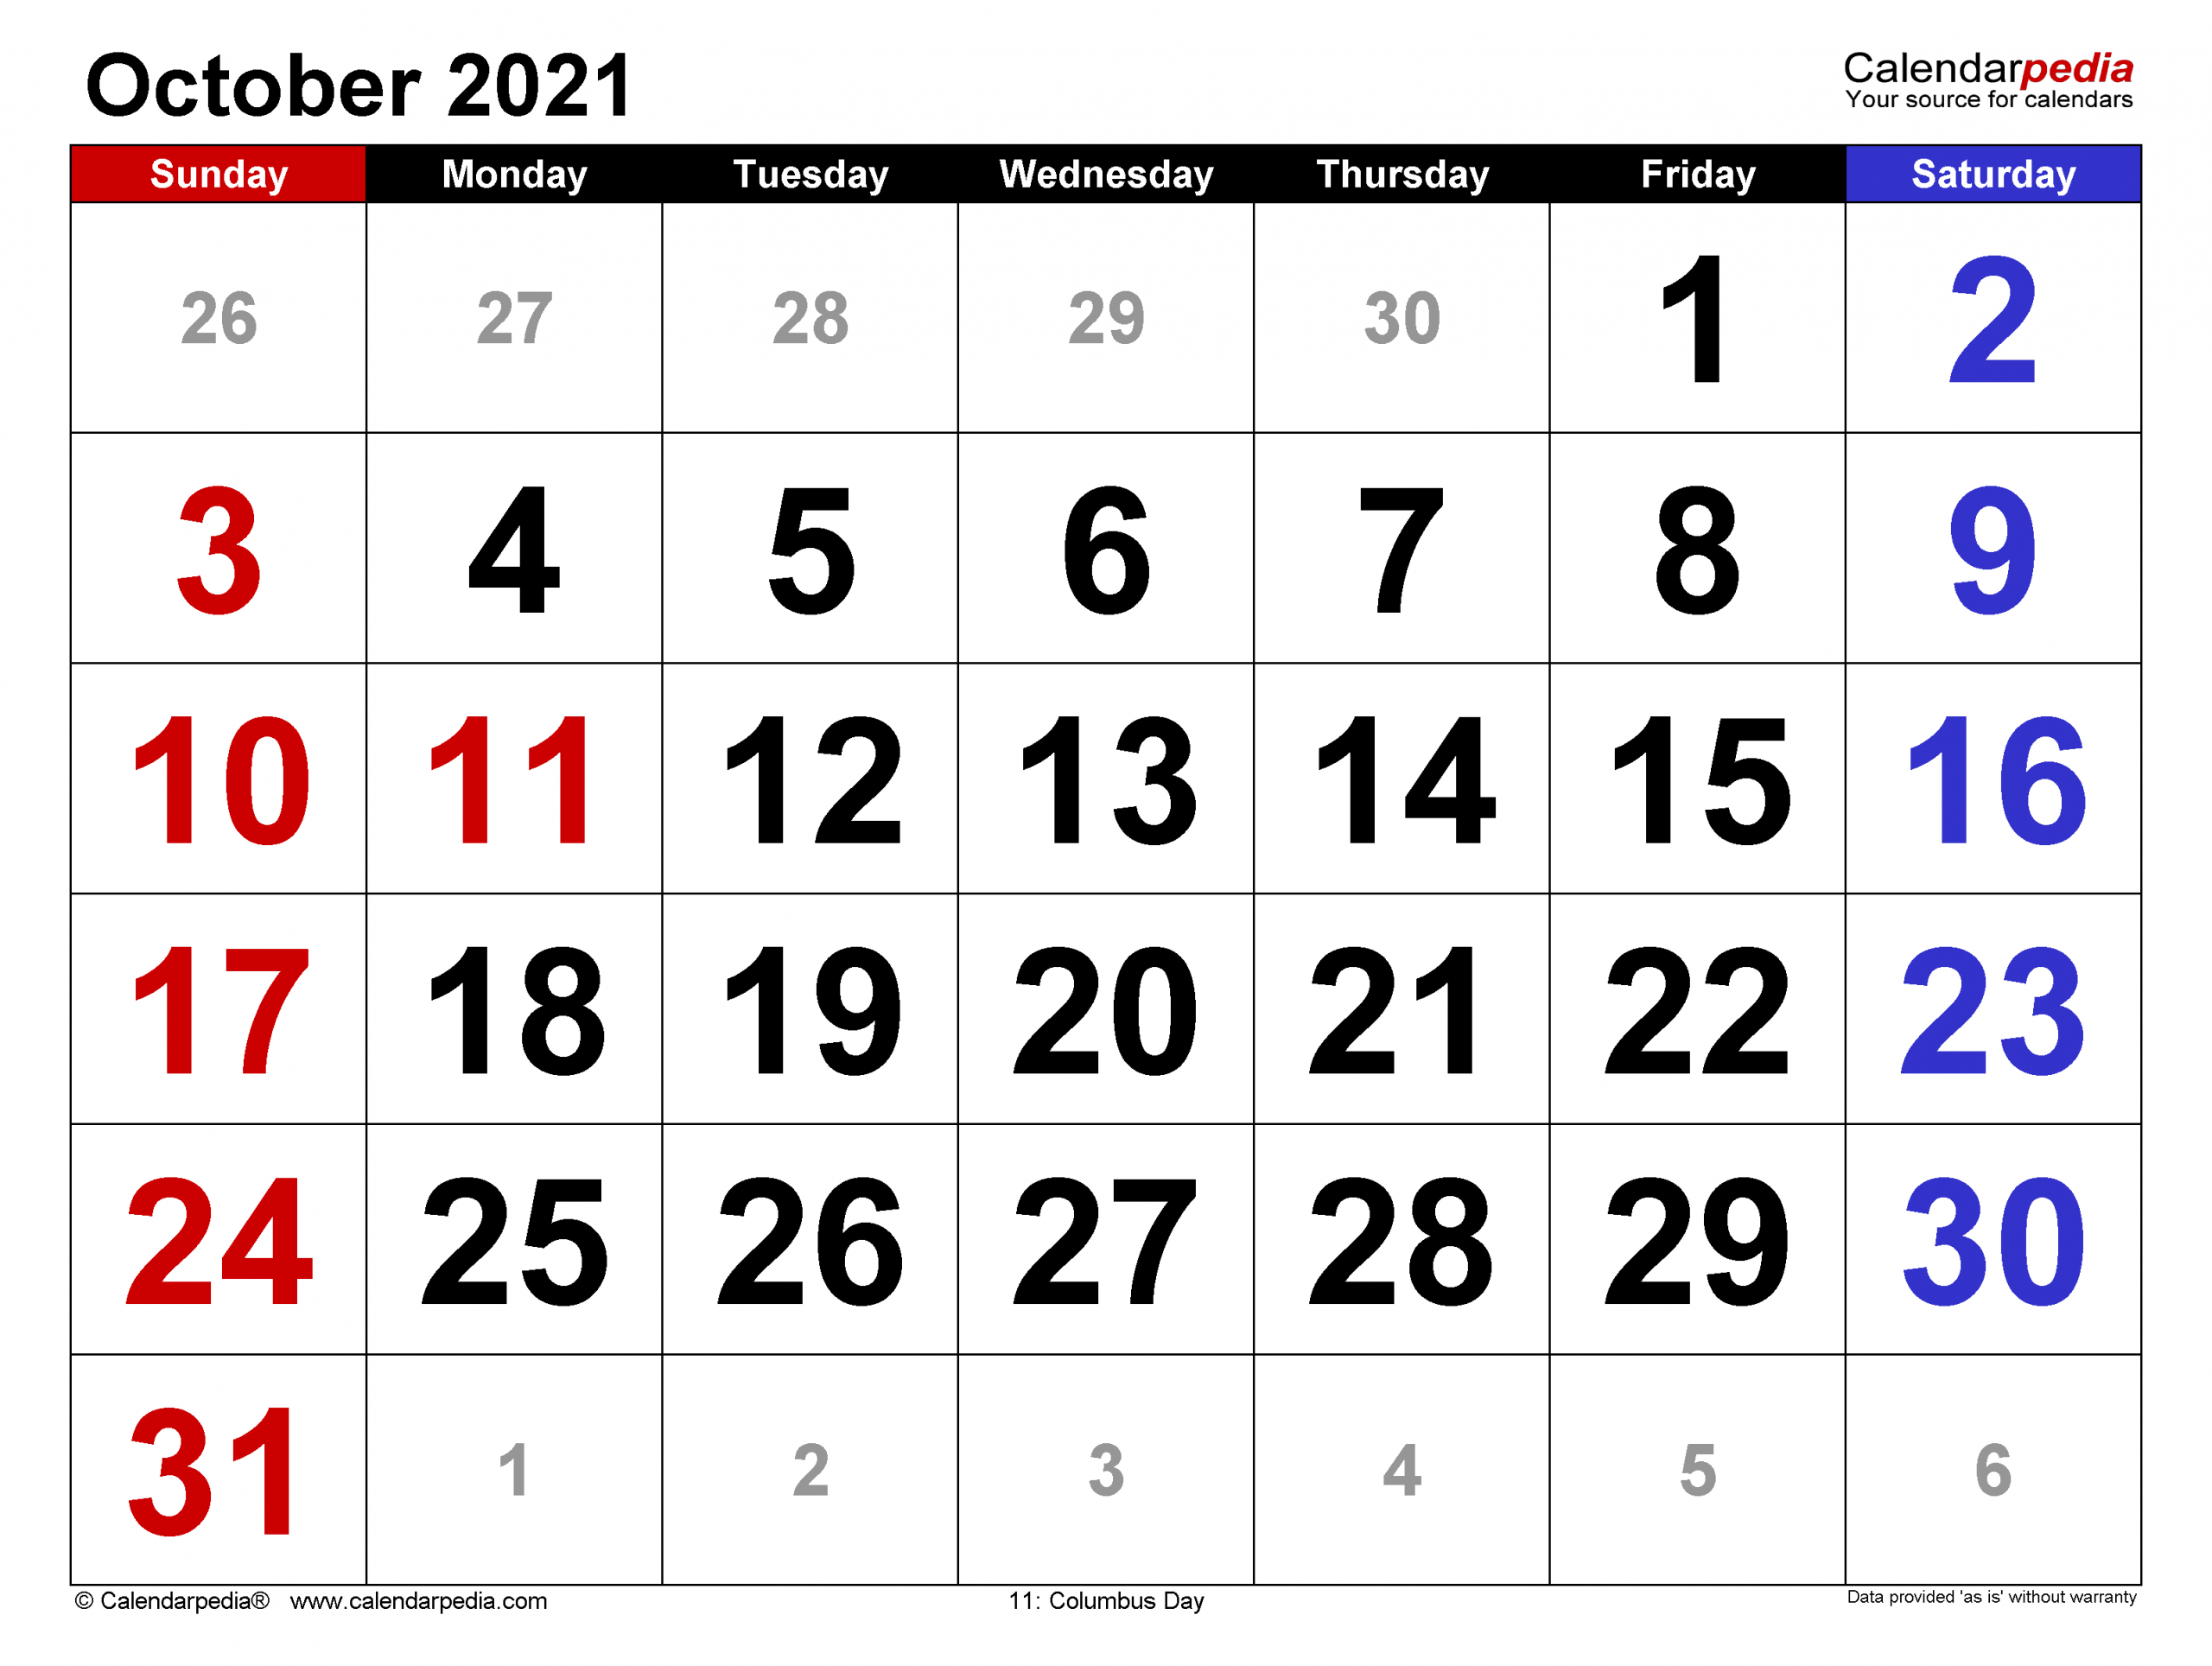 October 2021 Calendar | Templates For Word, Excel And Pdf November 2021 Calendar Events